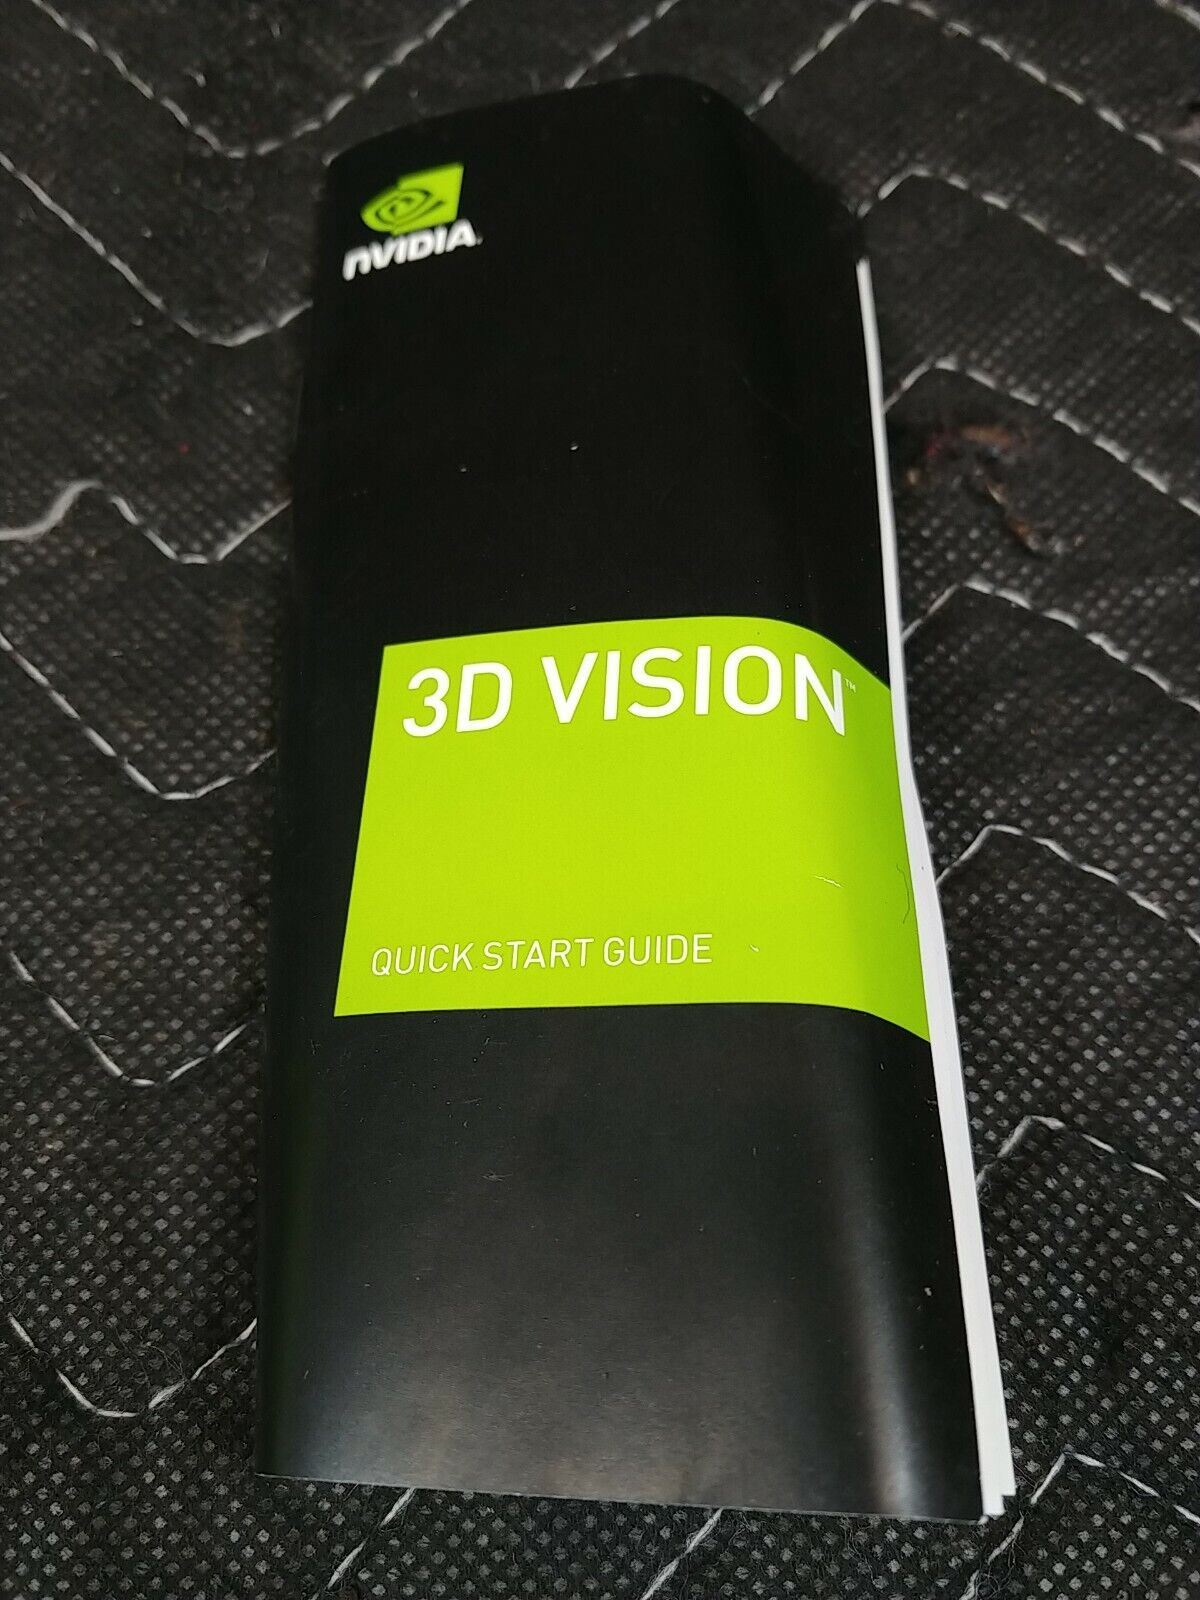 NVIDIA 3D Vision 2 Active 3D Glasses